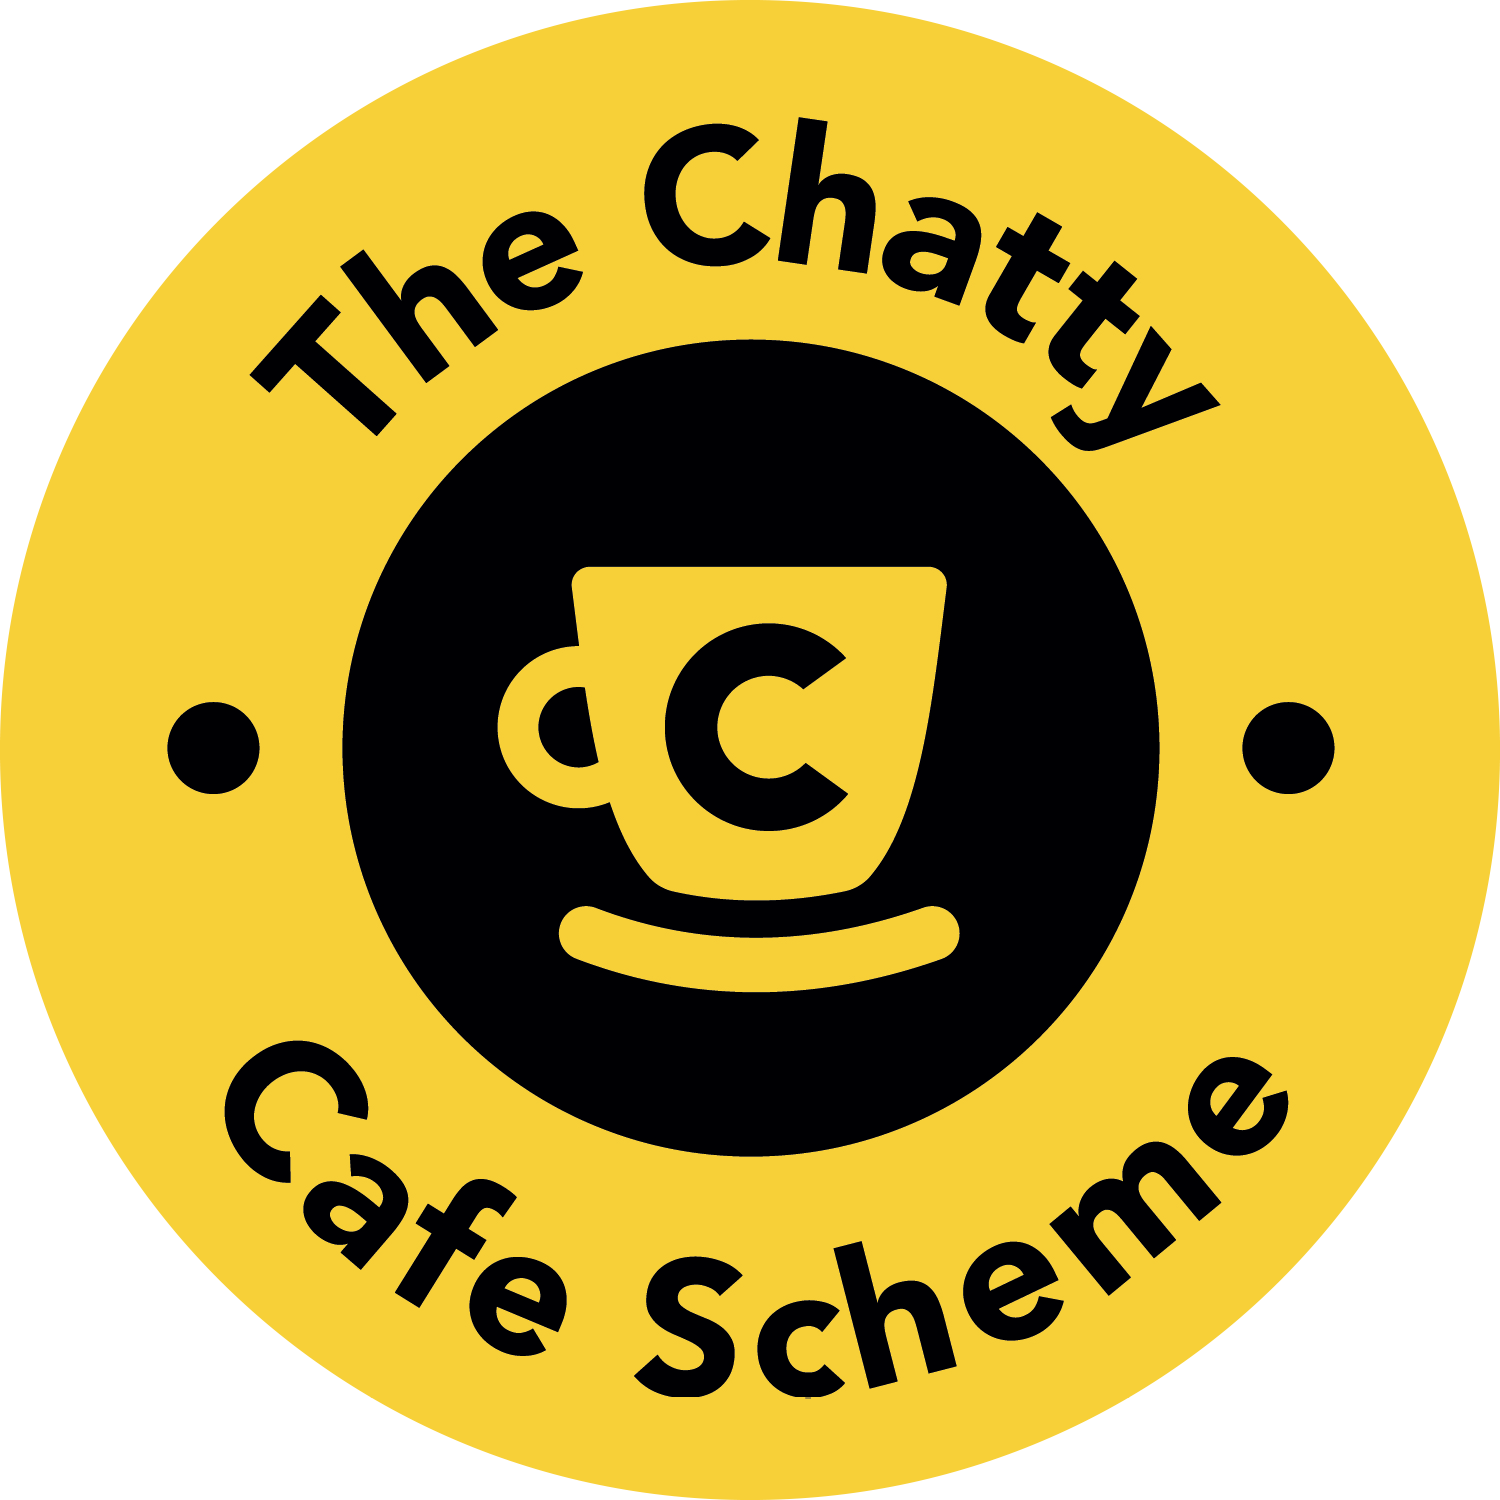 Profile of The Chatty Cafe Scheme Australia Ltd